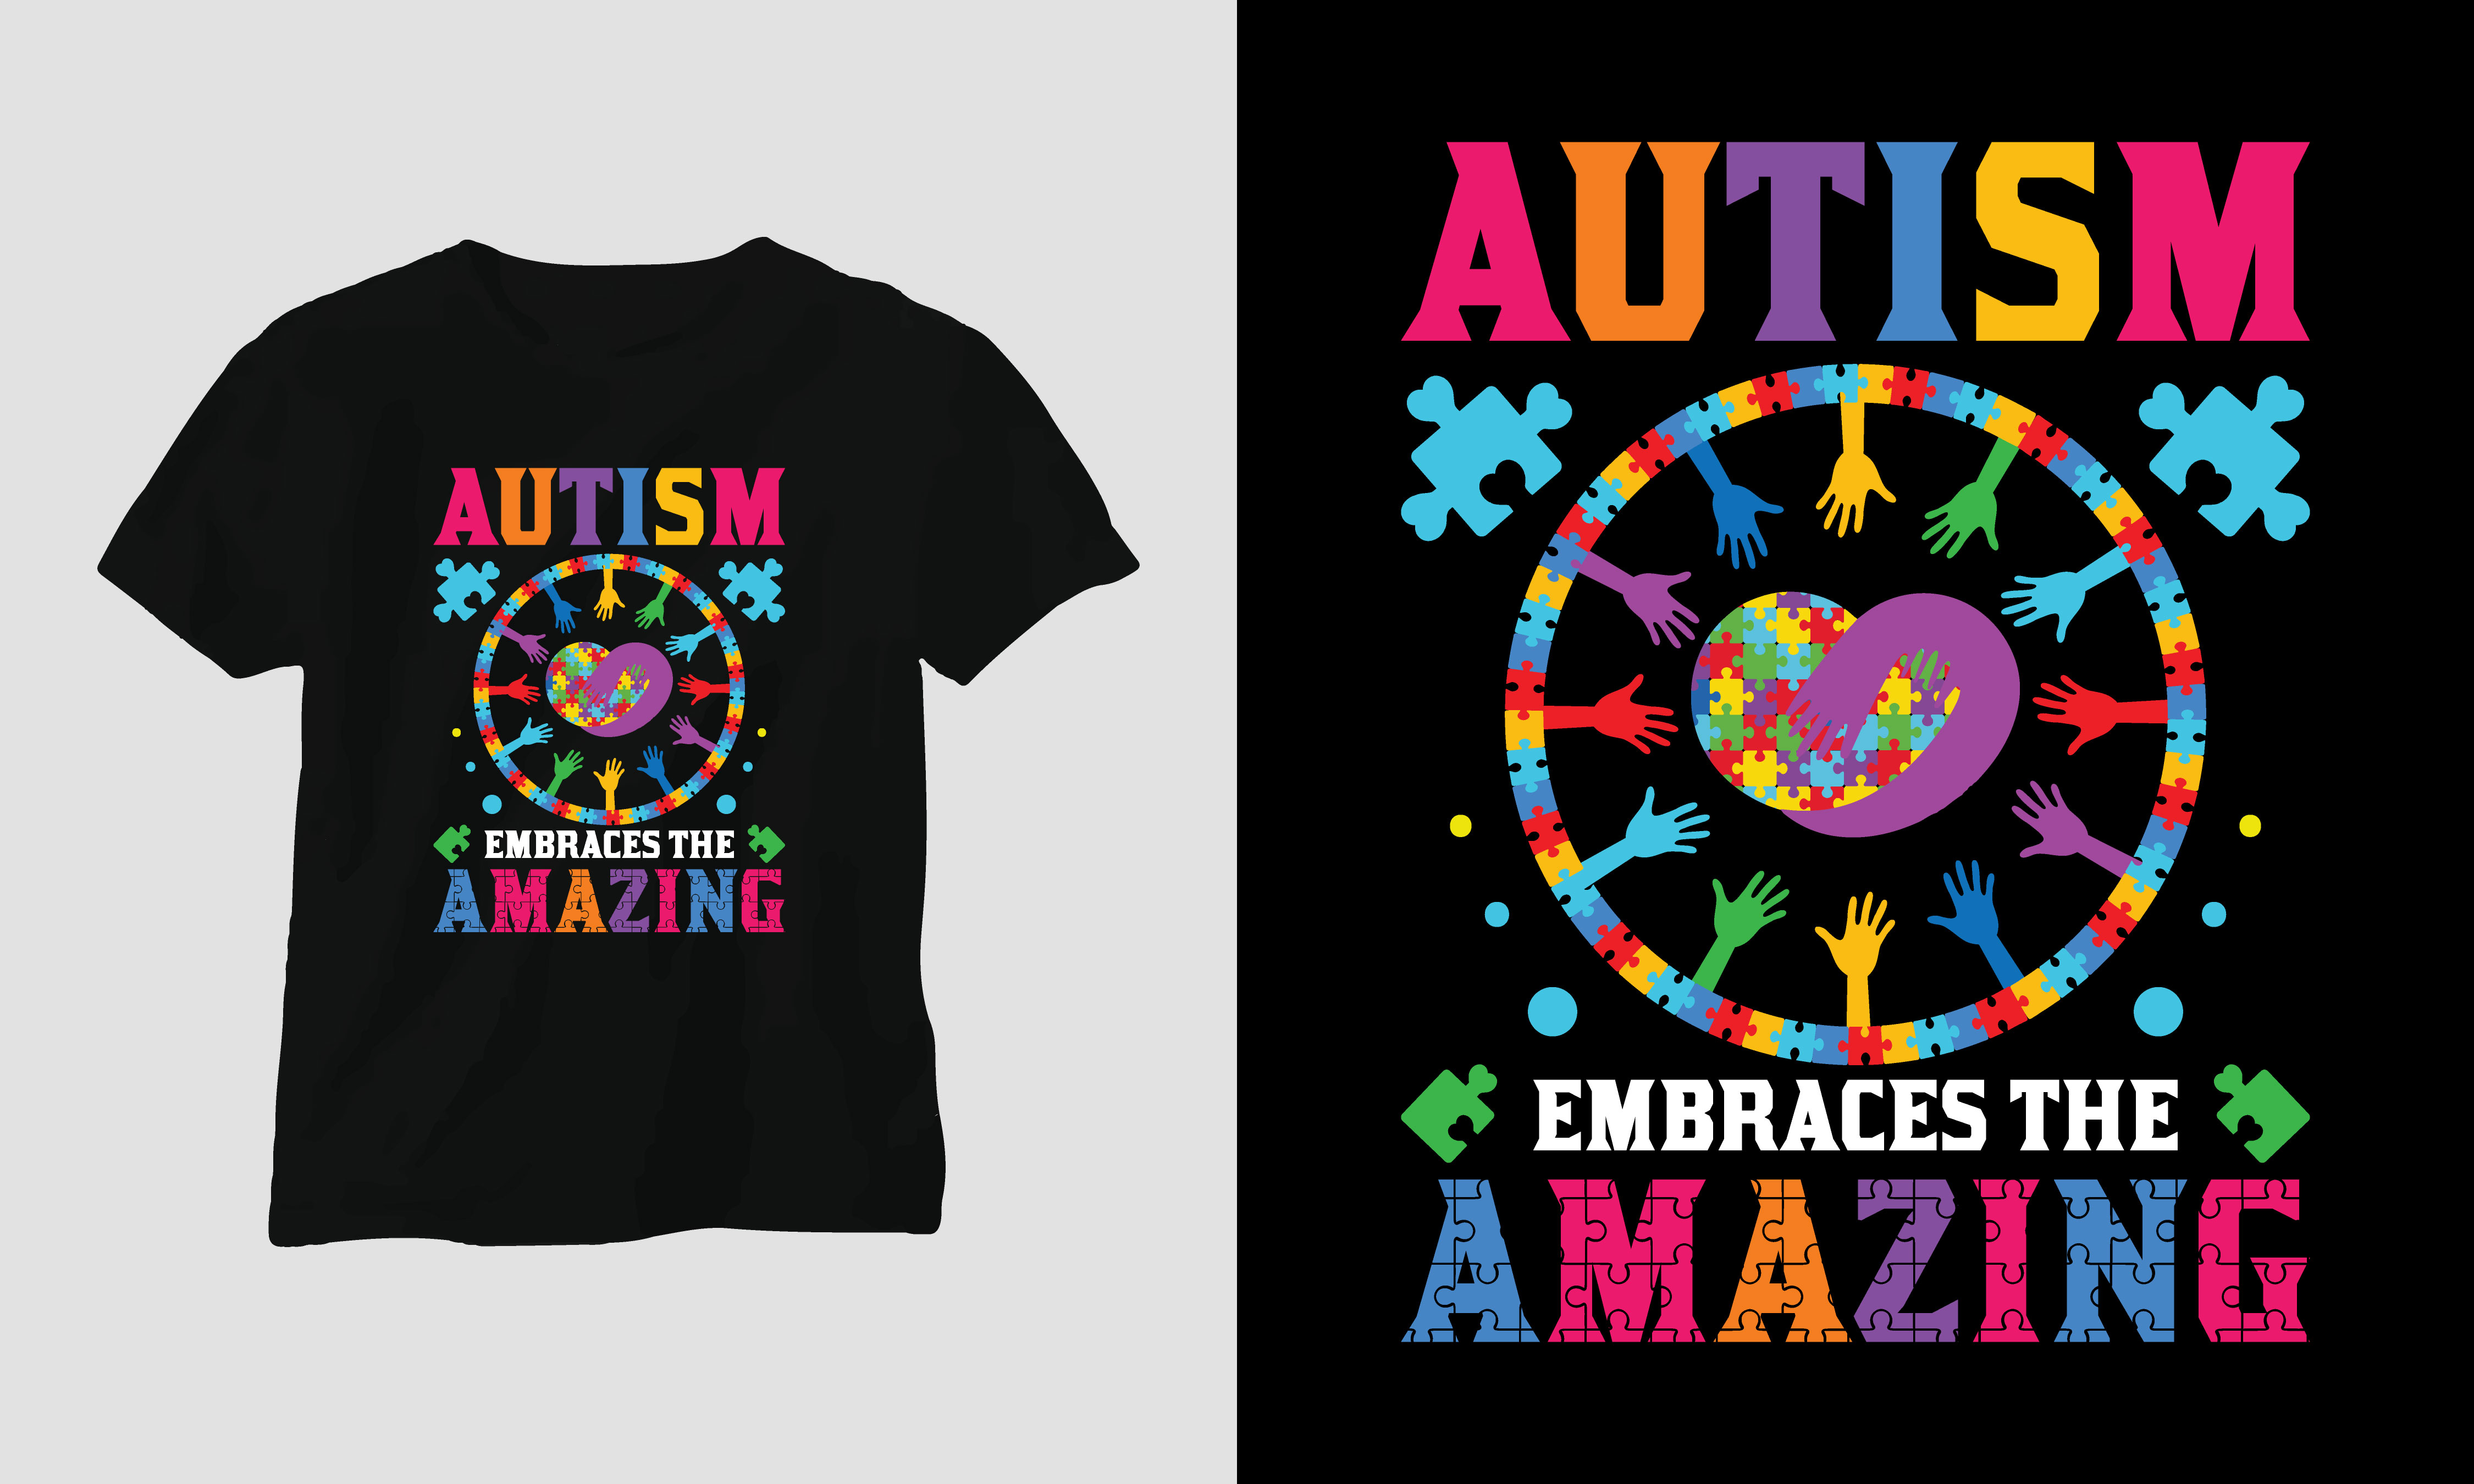 T-shirt Autism Embraces the Amazing preview image.